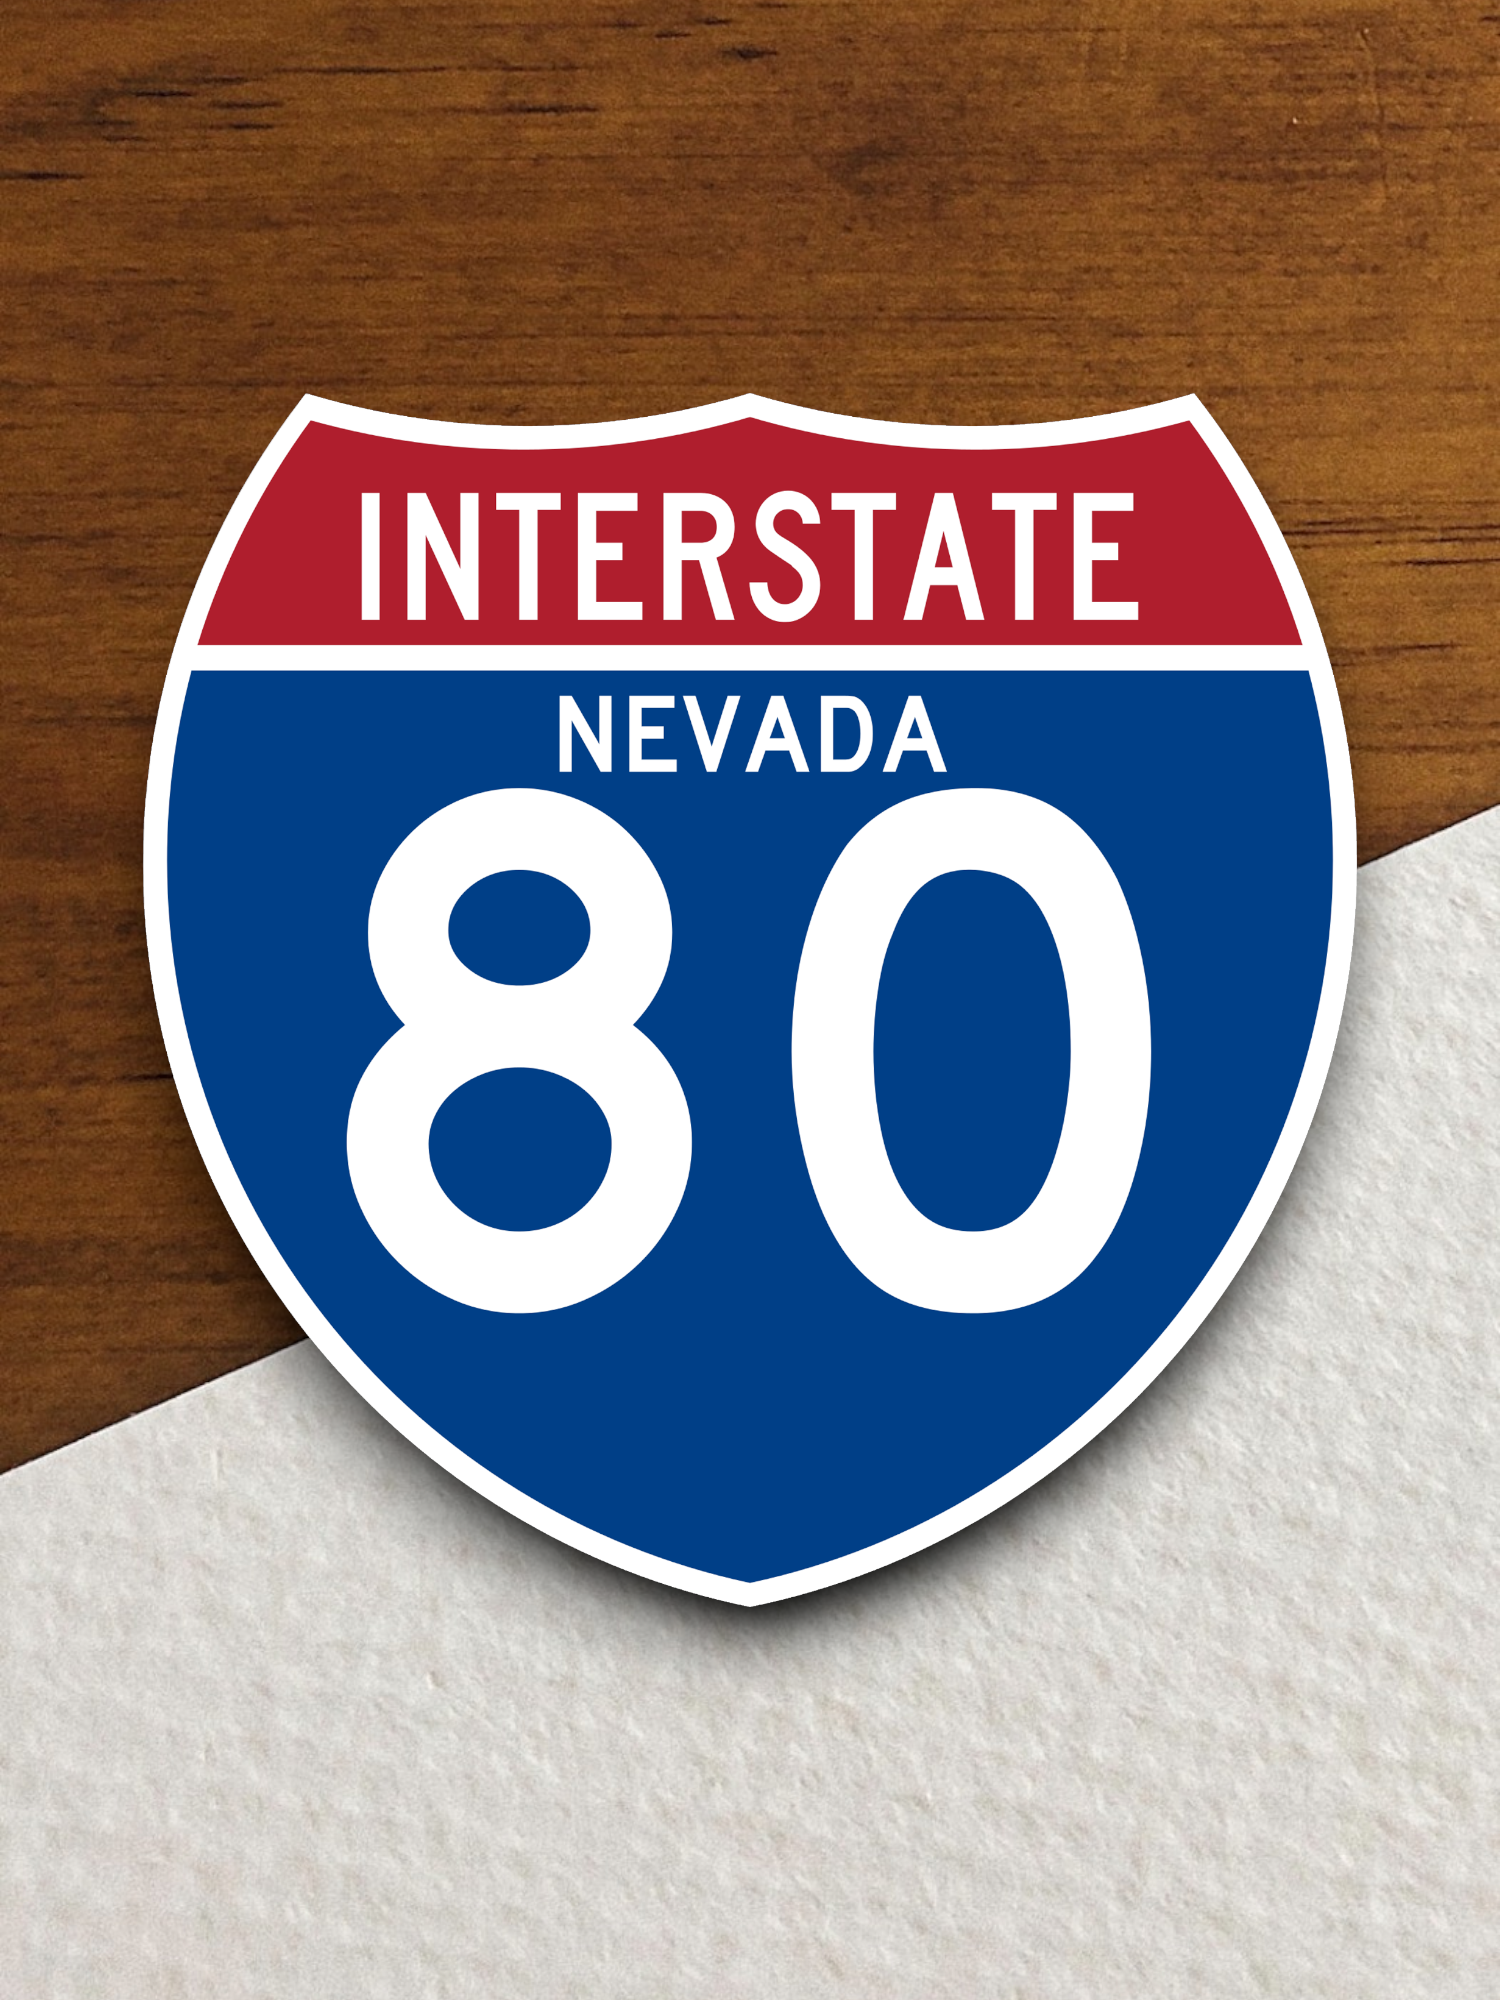 Interstate I-80 - Nevada - Road Sign Sticker